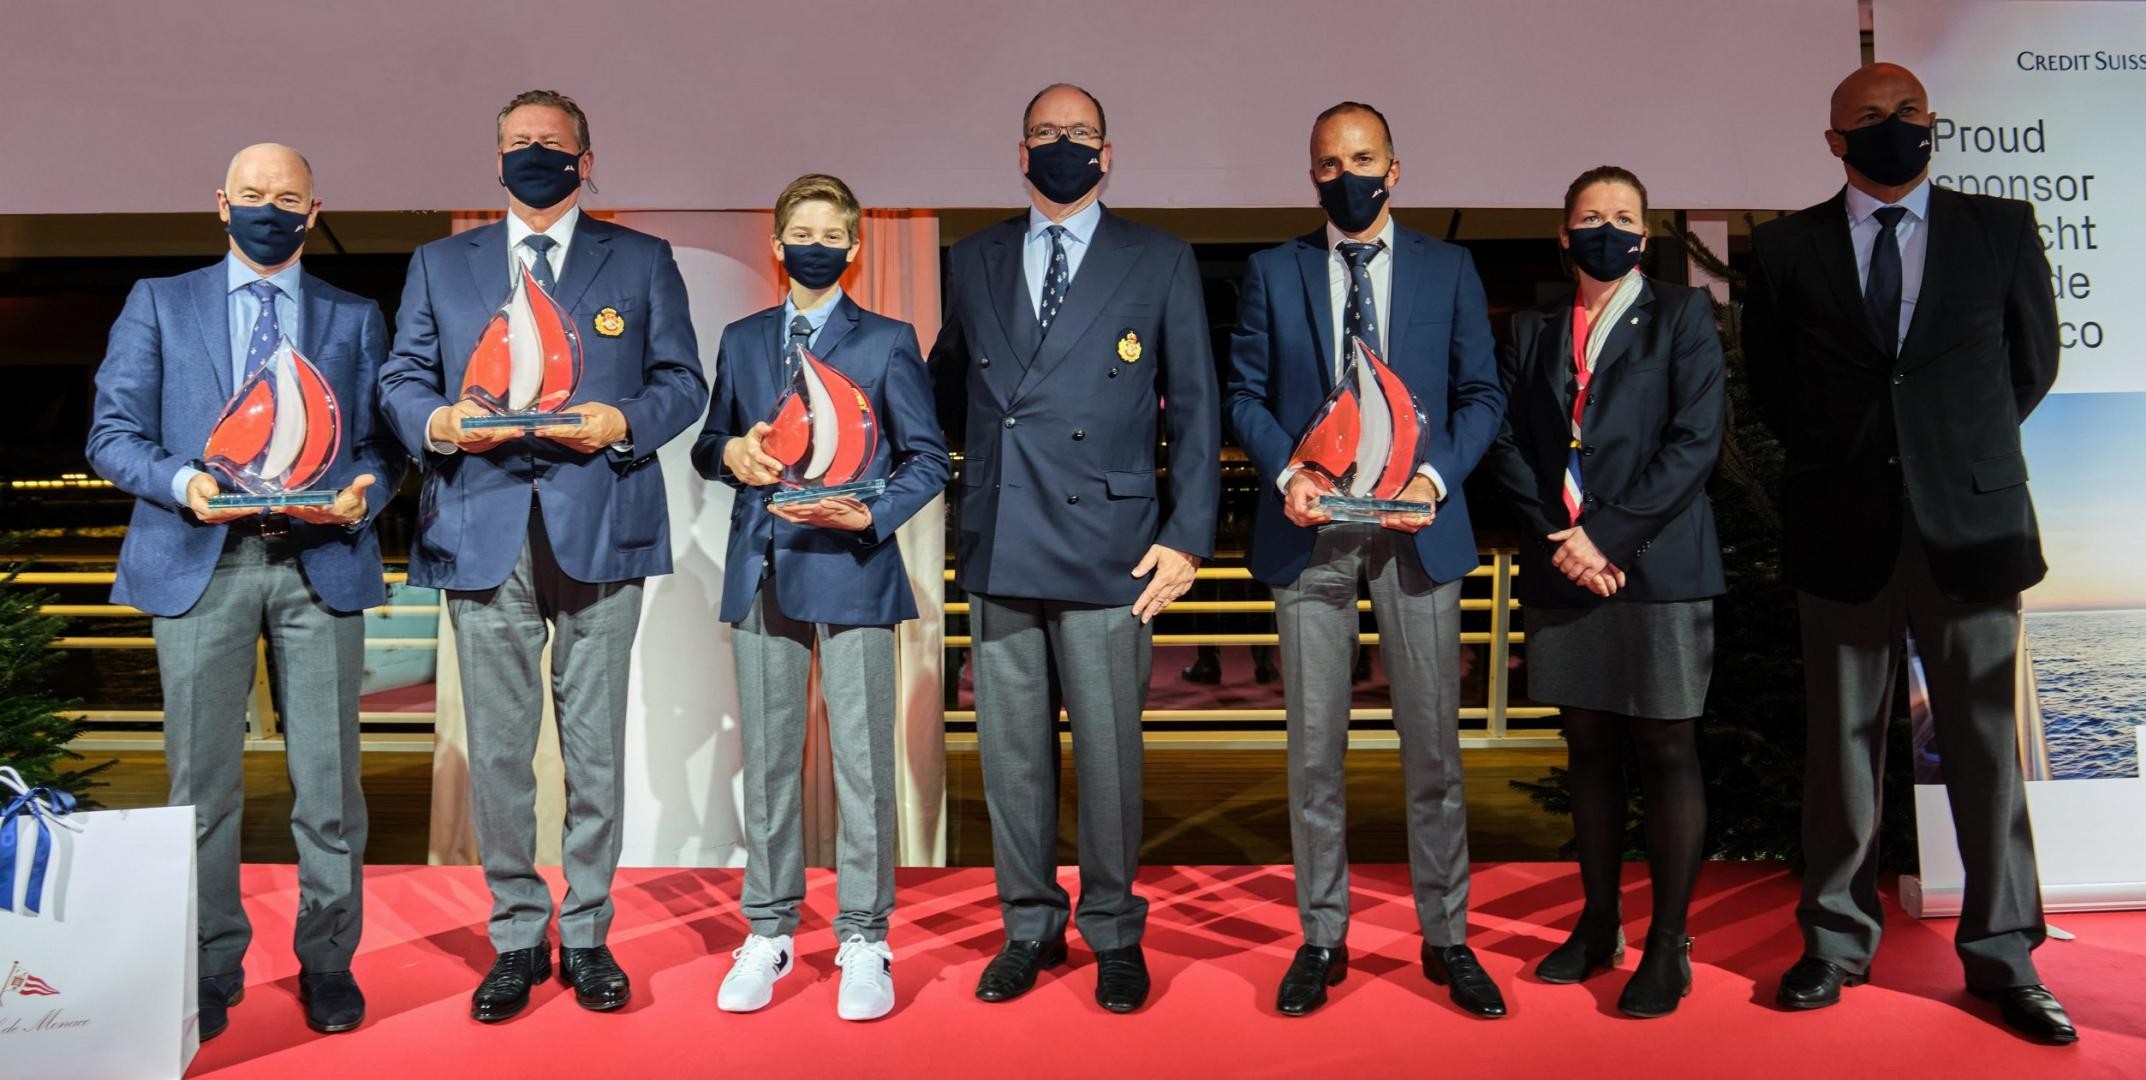 Yacht Club de Monaco Awards - Trophée Credit Suisse 2020